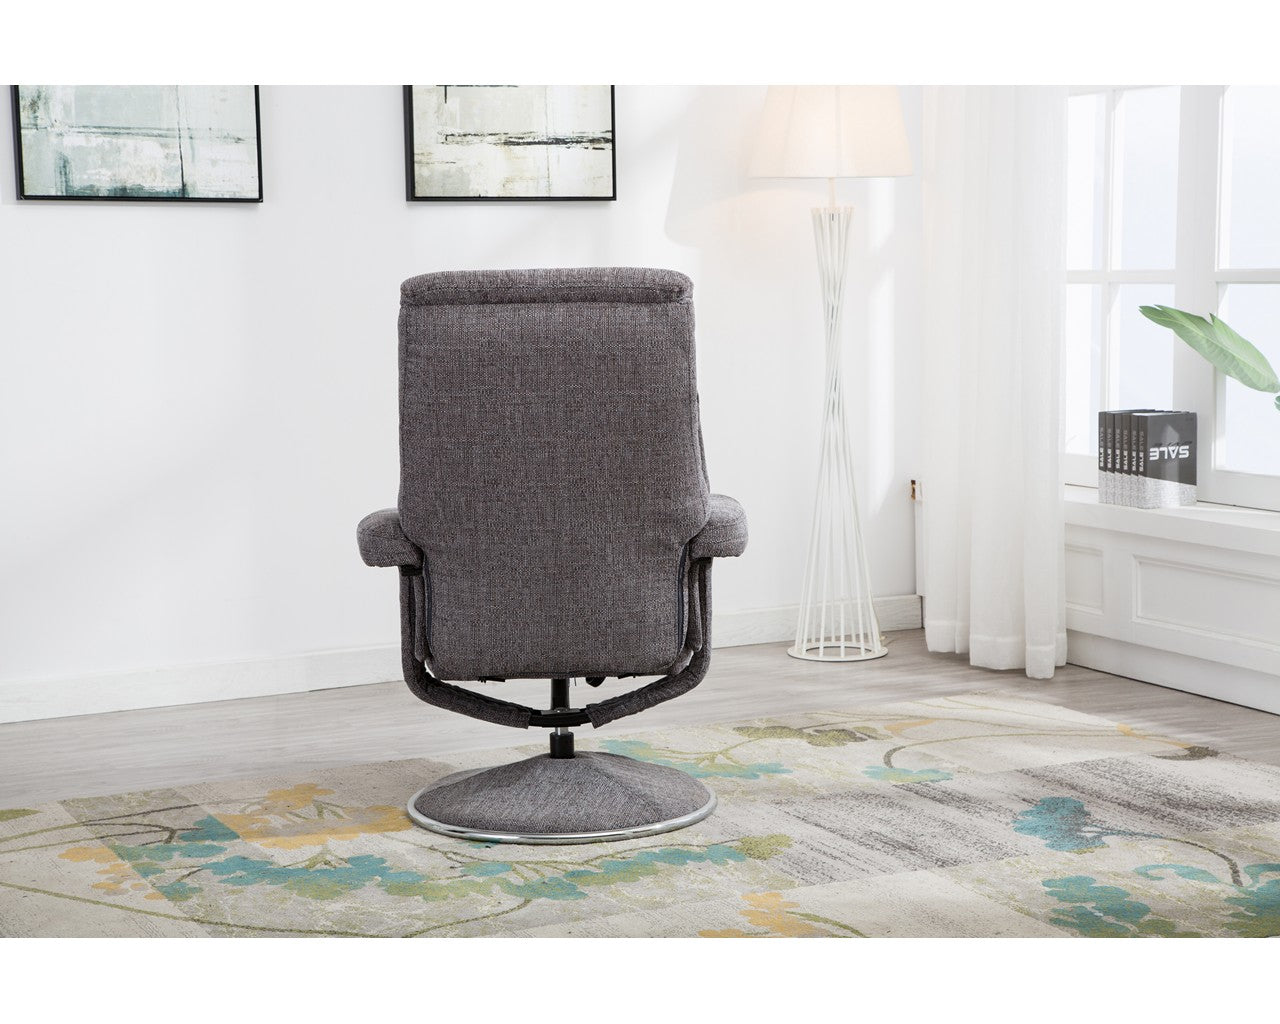 Swivel Recliner Chair Collection - Biarritz: Lisbon Grey